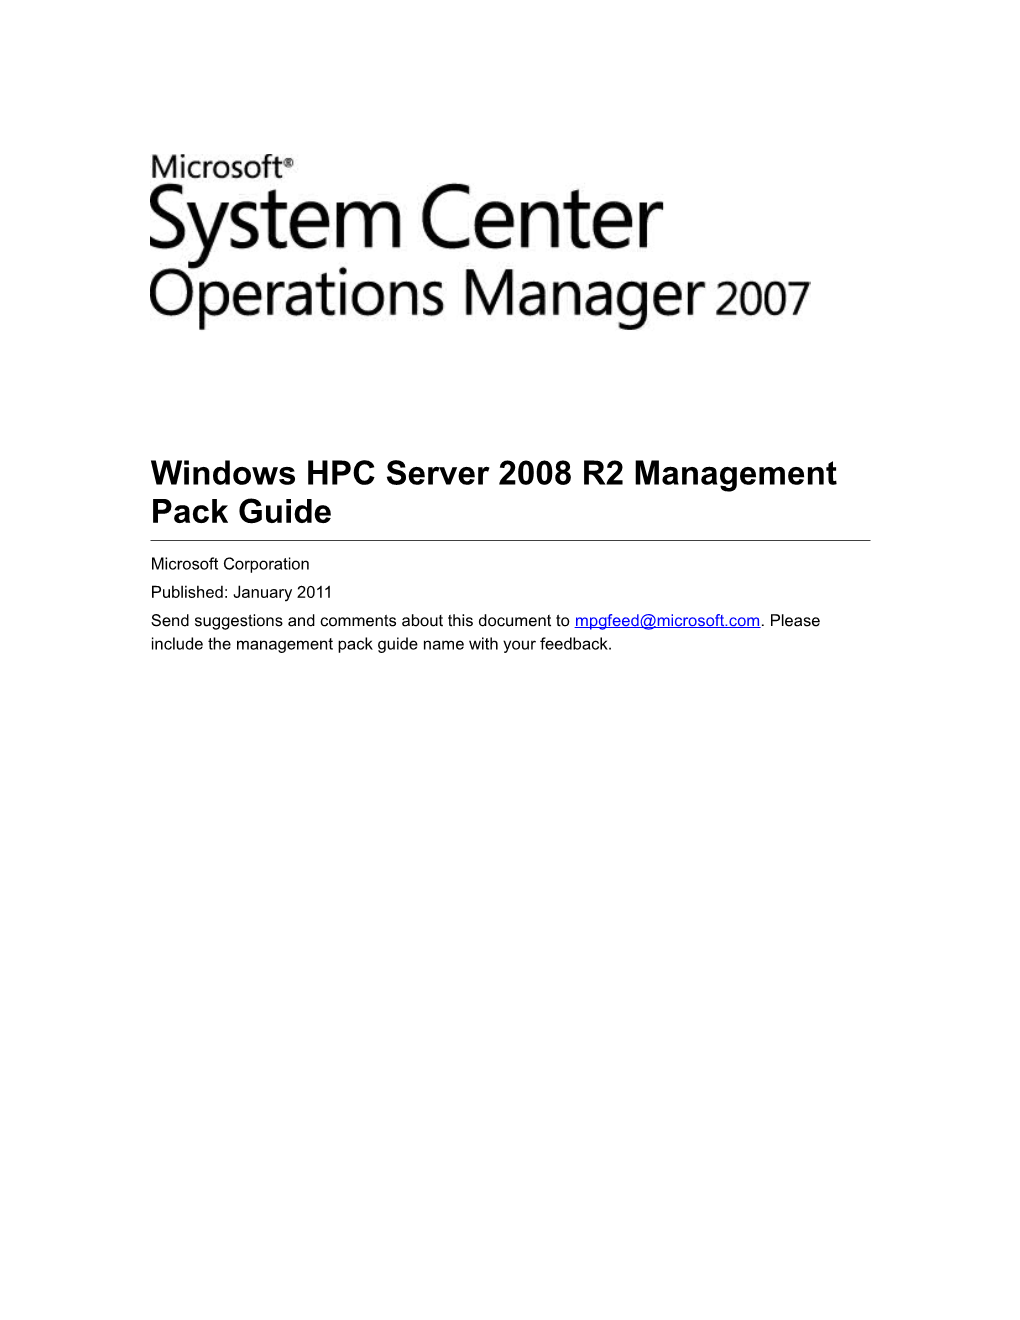 Windows HPC Server 2008 R2 Management Pack Guide